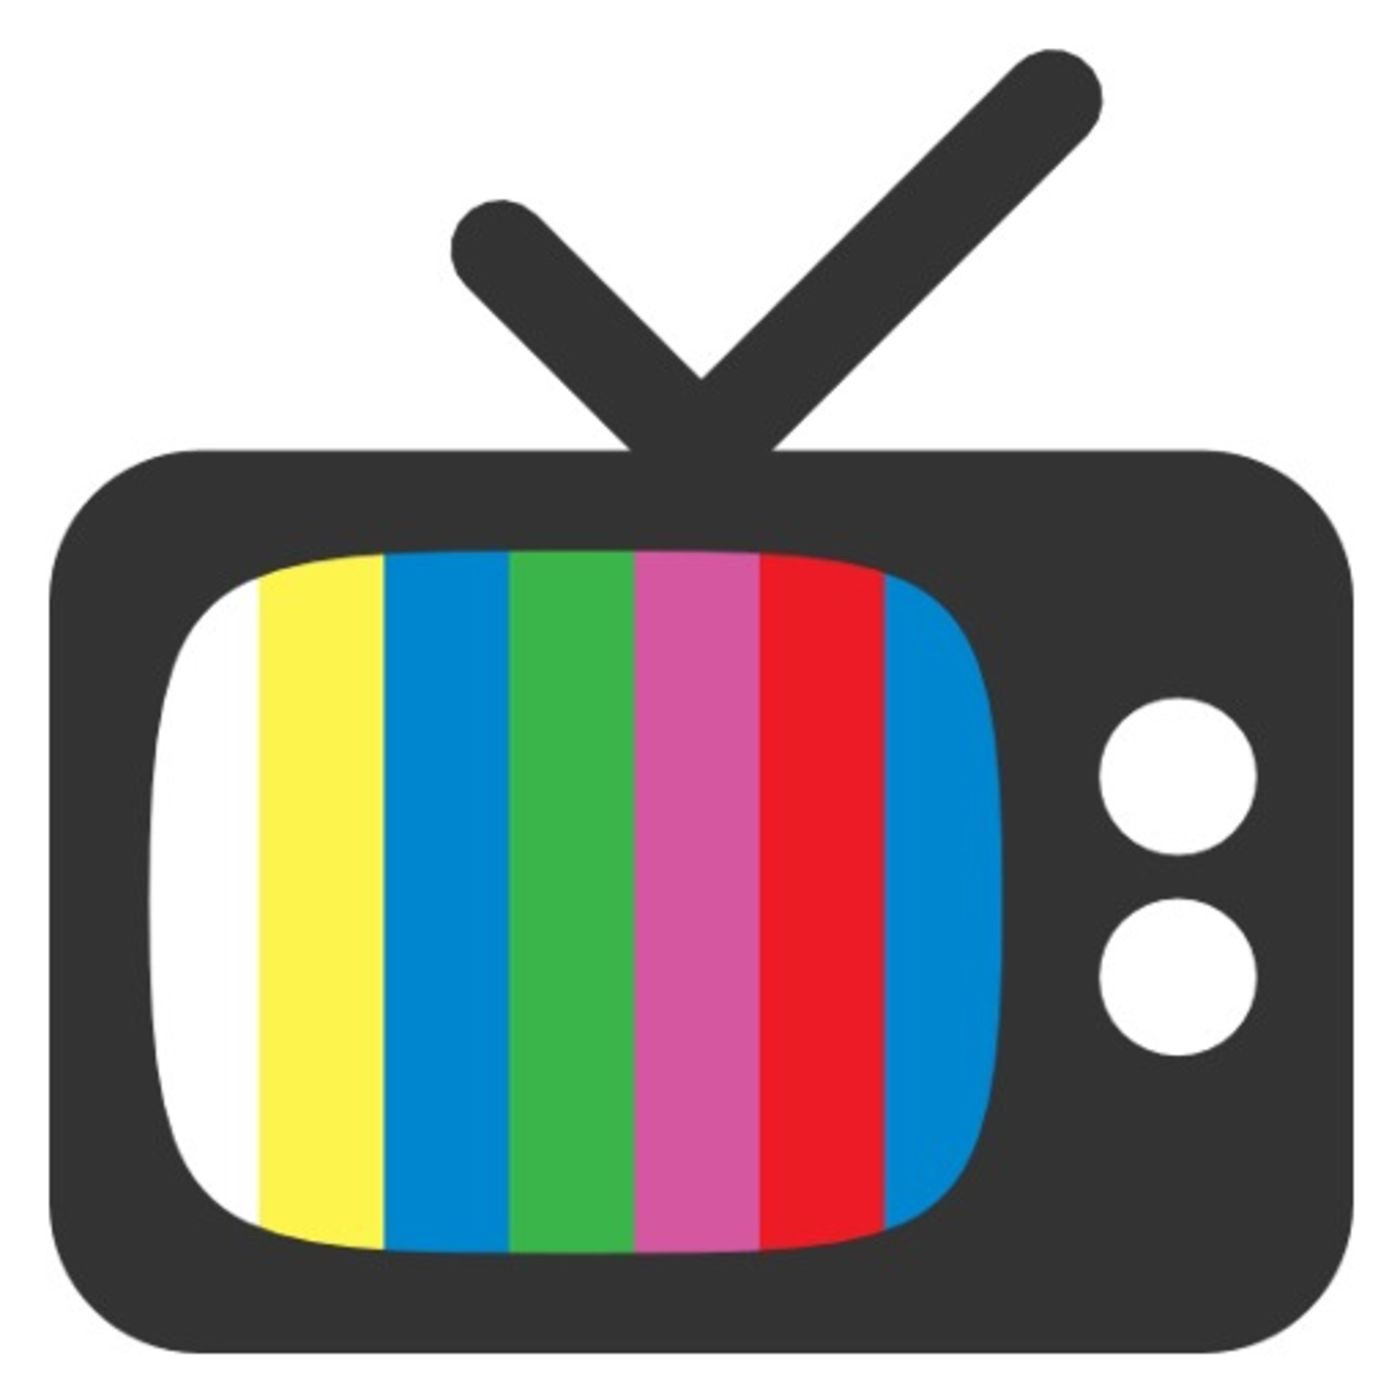 Топкамс тв. Значок телевизора. Пиктограмма телевизор. Телевизор логотип. Телевизор символ.